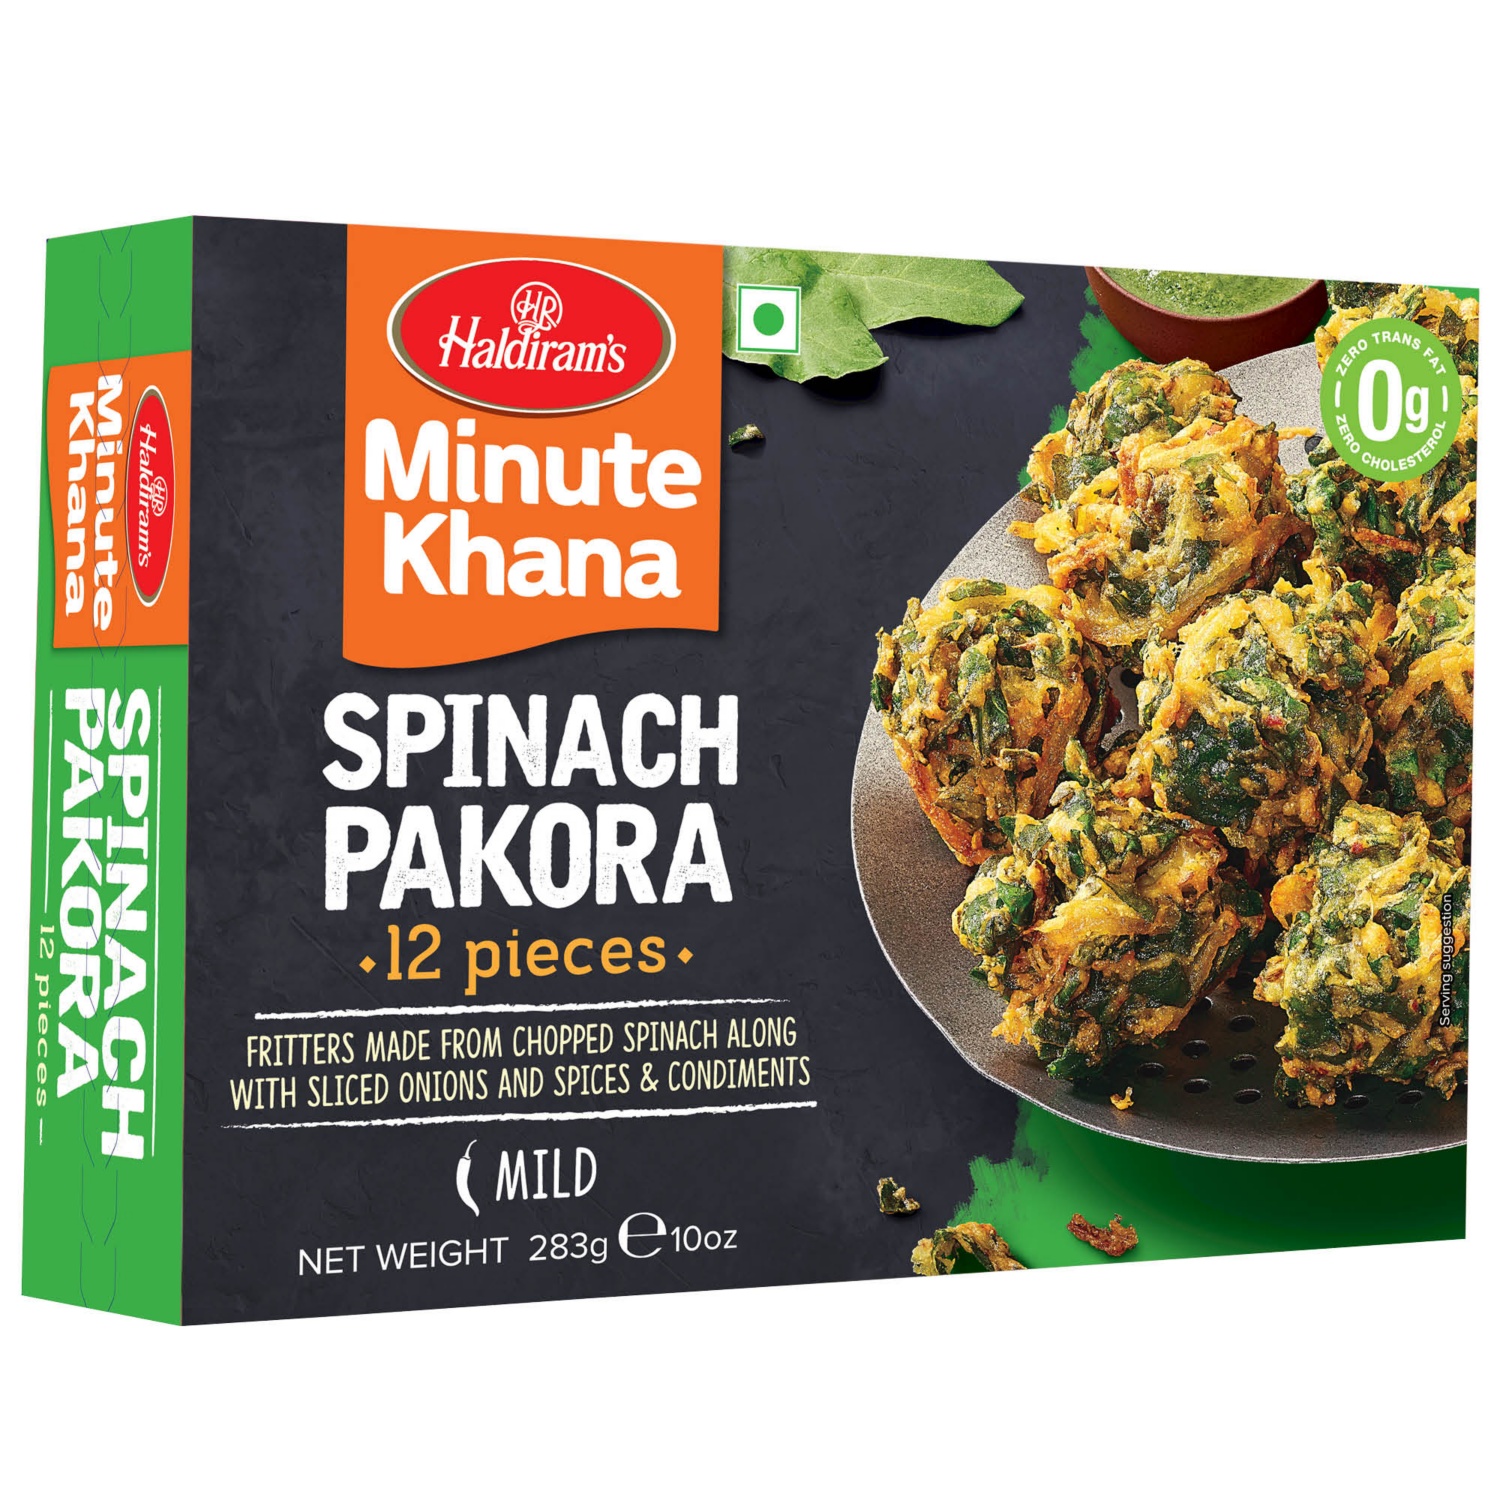 Onion Bhaji-Spinach Pakora SG, 2